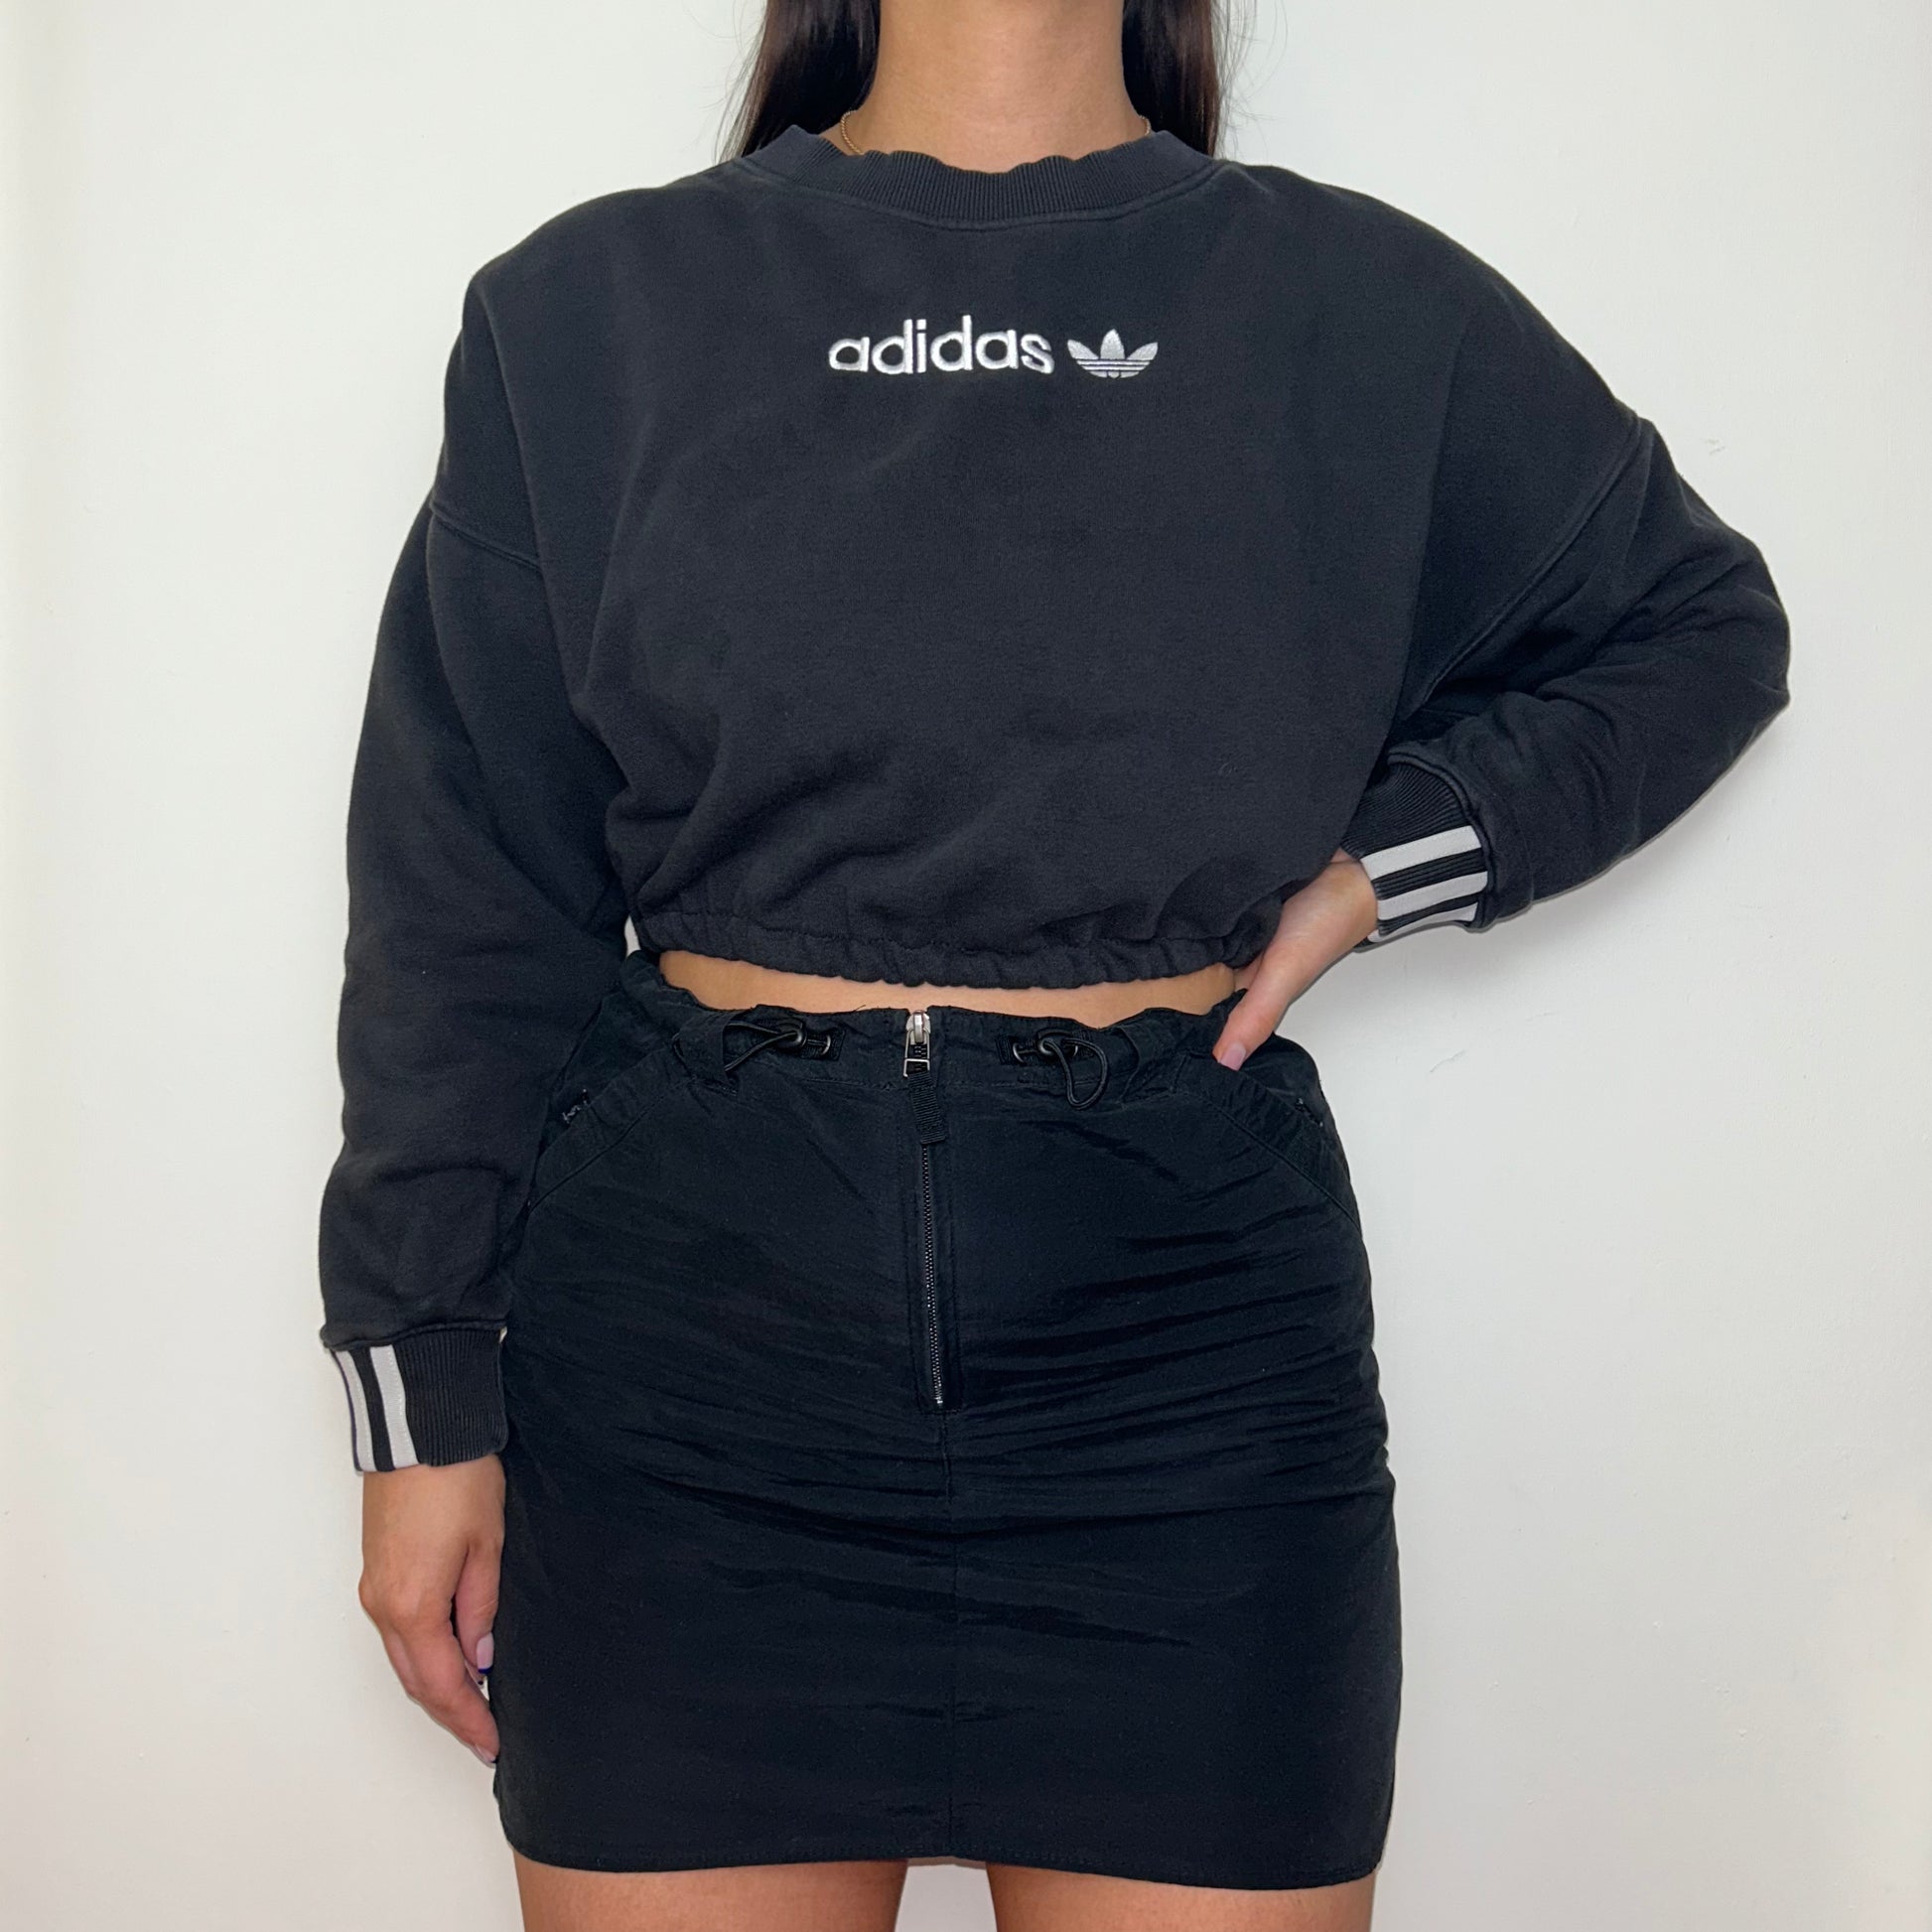 black cropped sweatshirt with white adidas logo shown on a model wearing a black mini skirt